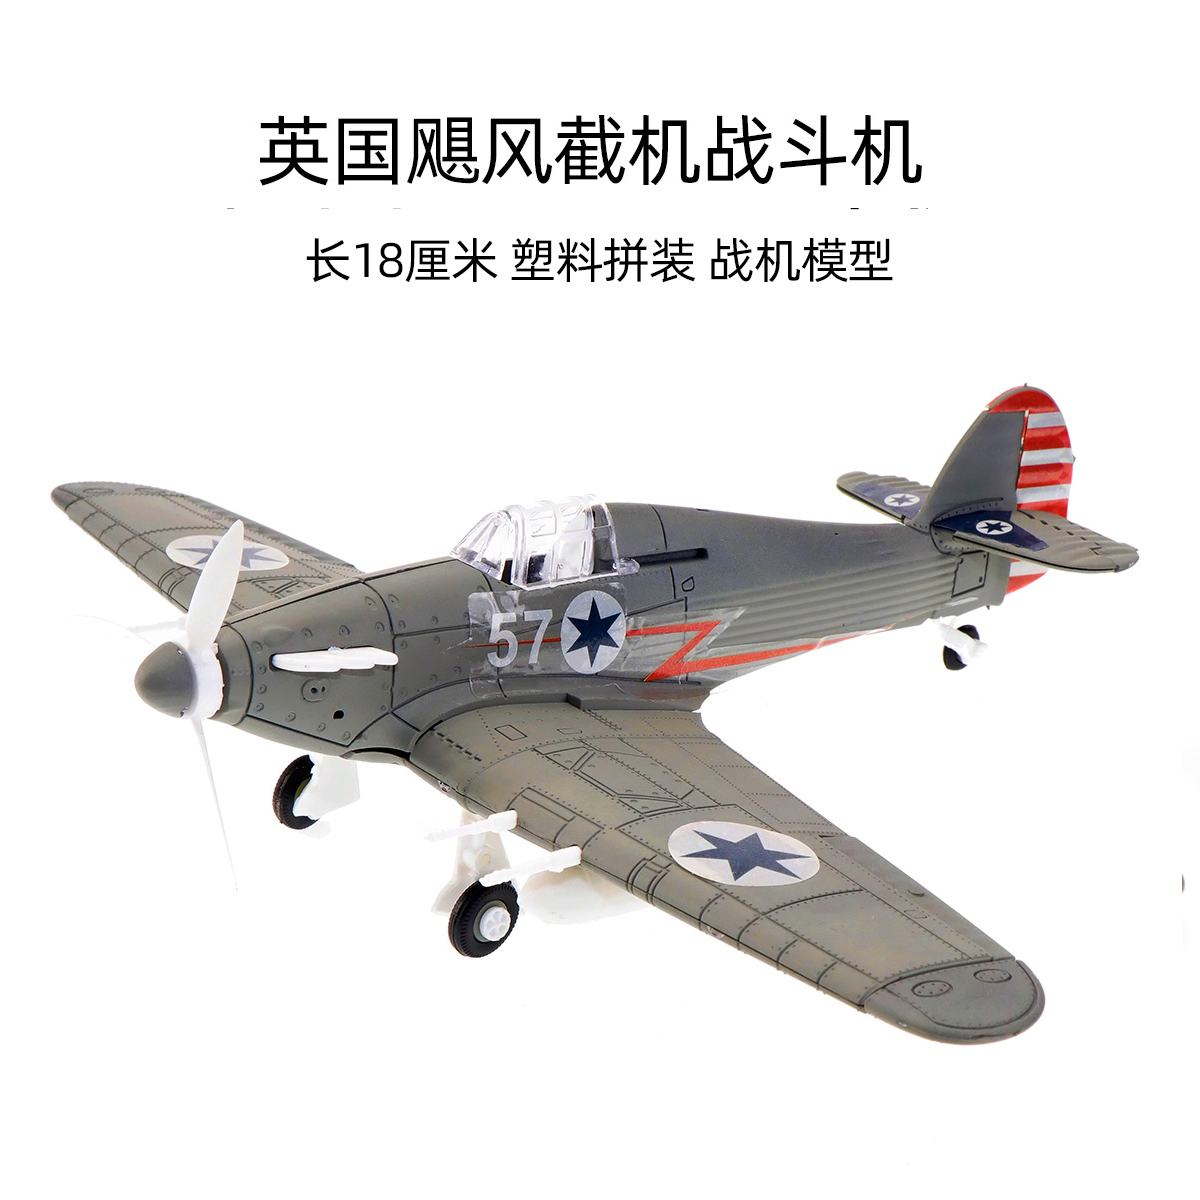 4D模型二战飞机海盗舰载战斗机1/48拼装模型BF109喷火野马飓风